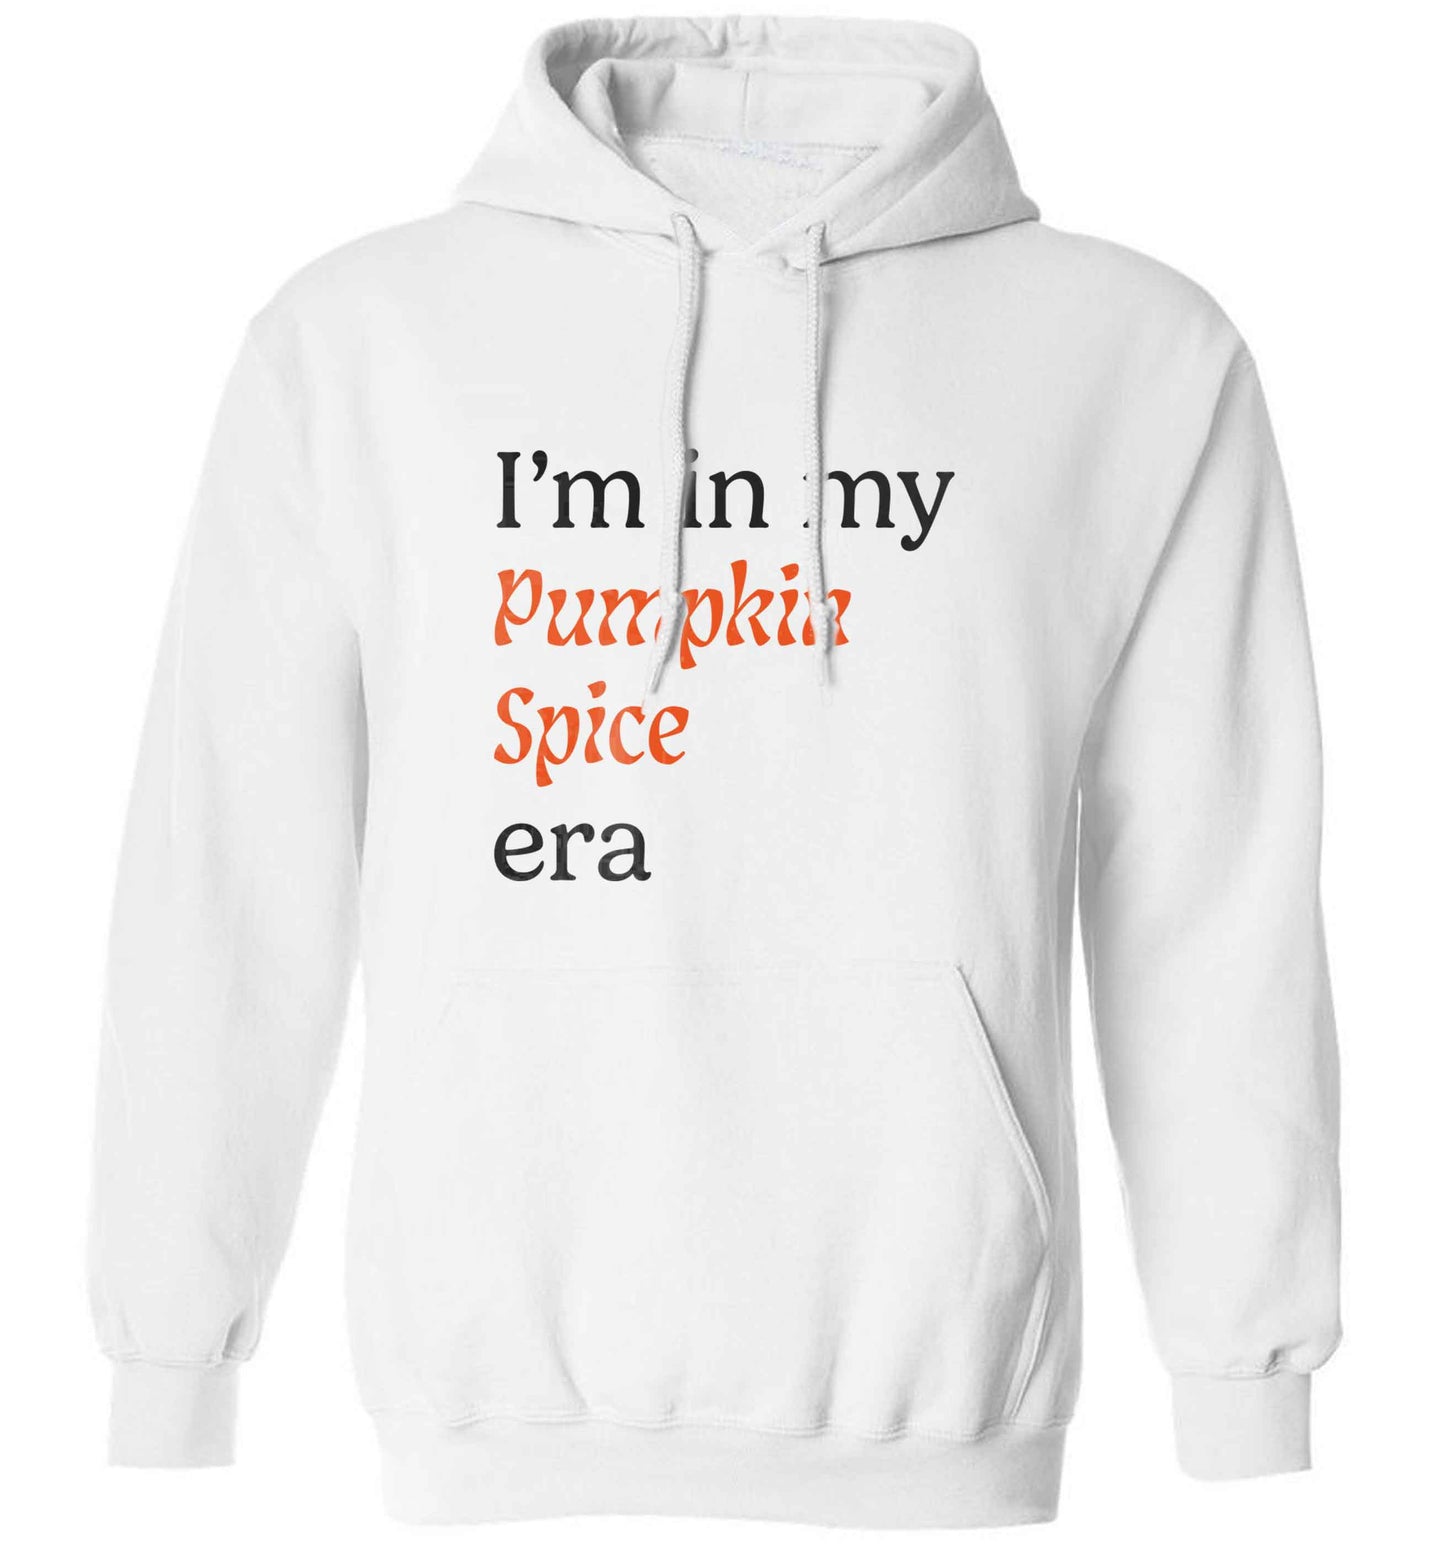 I'm in my pumpkin spice era Kit adults unisex white hoodie 2XL